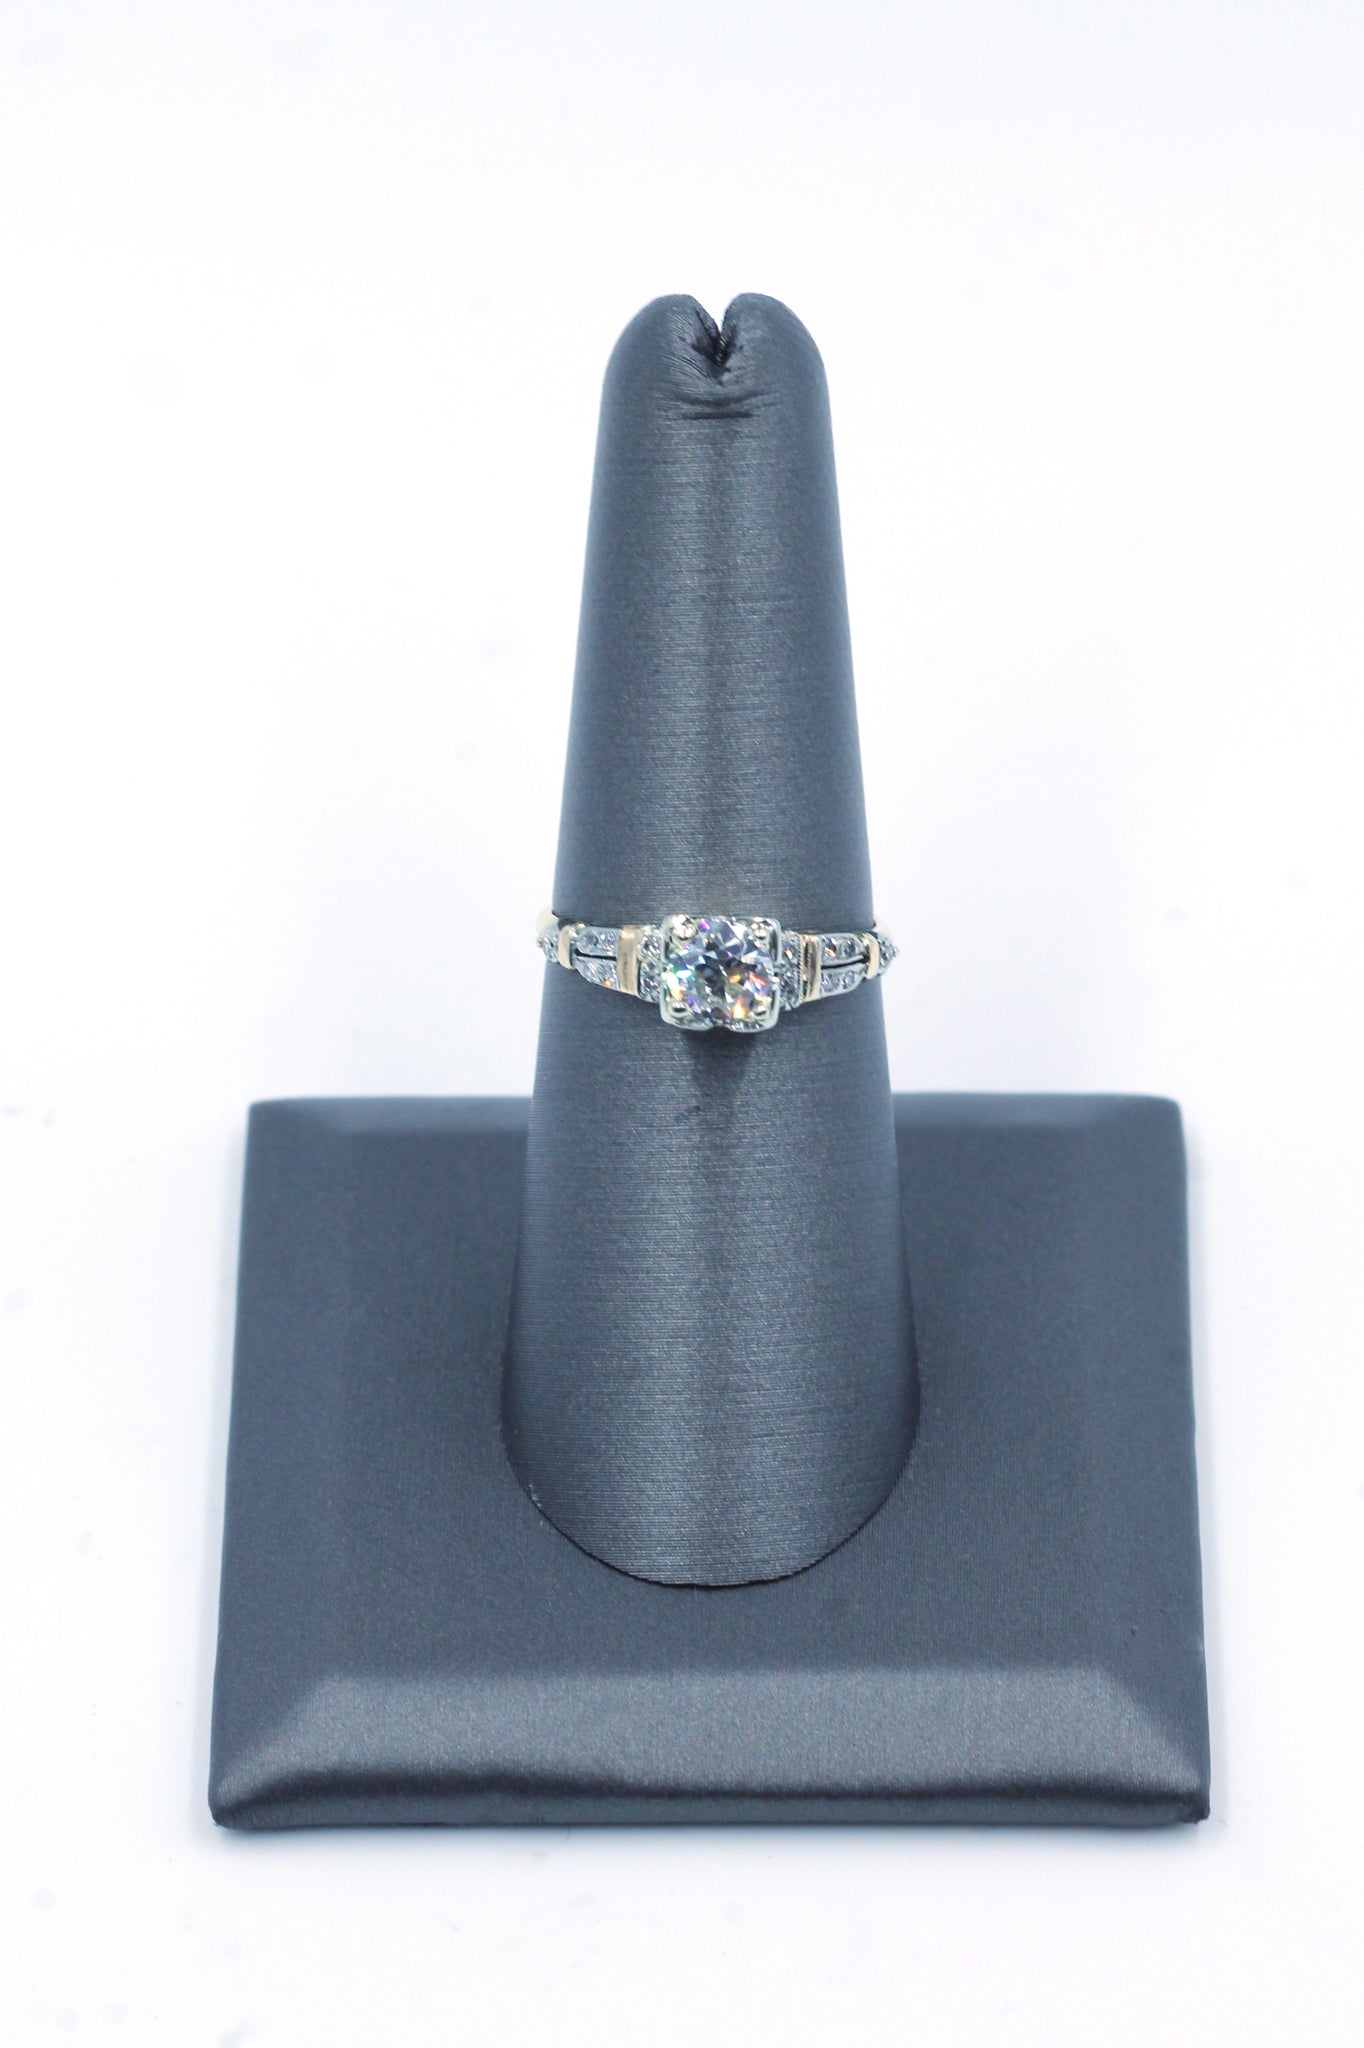 Vintage Diamond Ring, SOLD